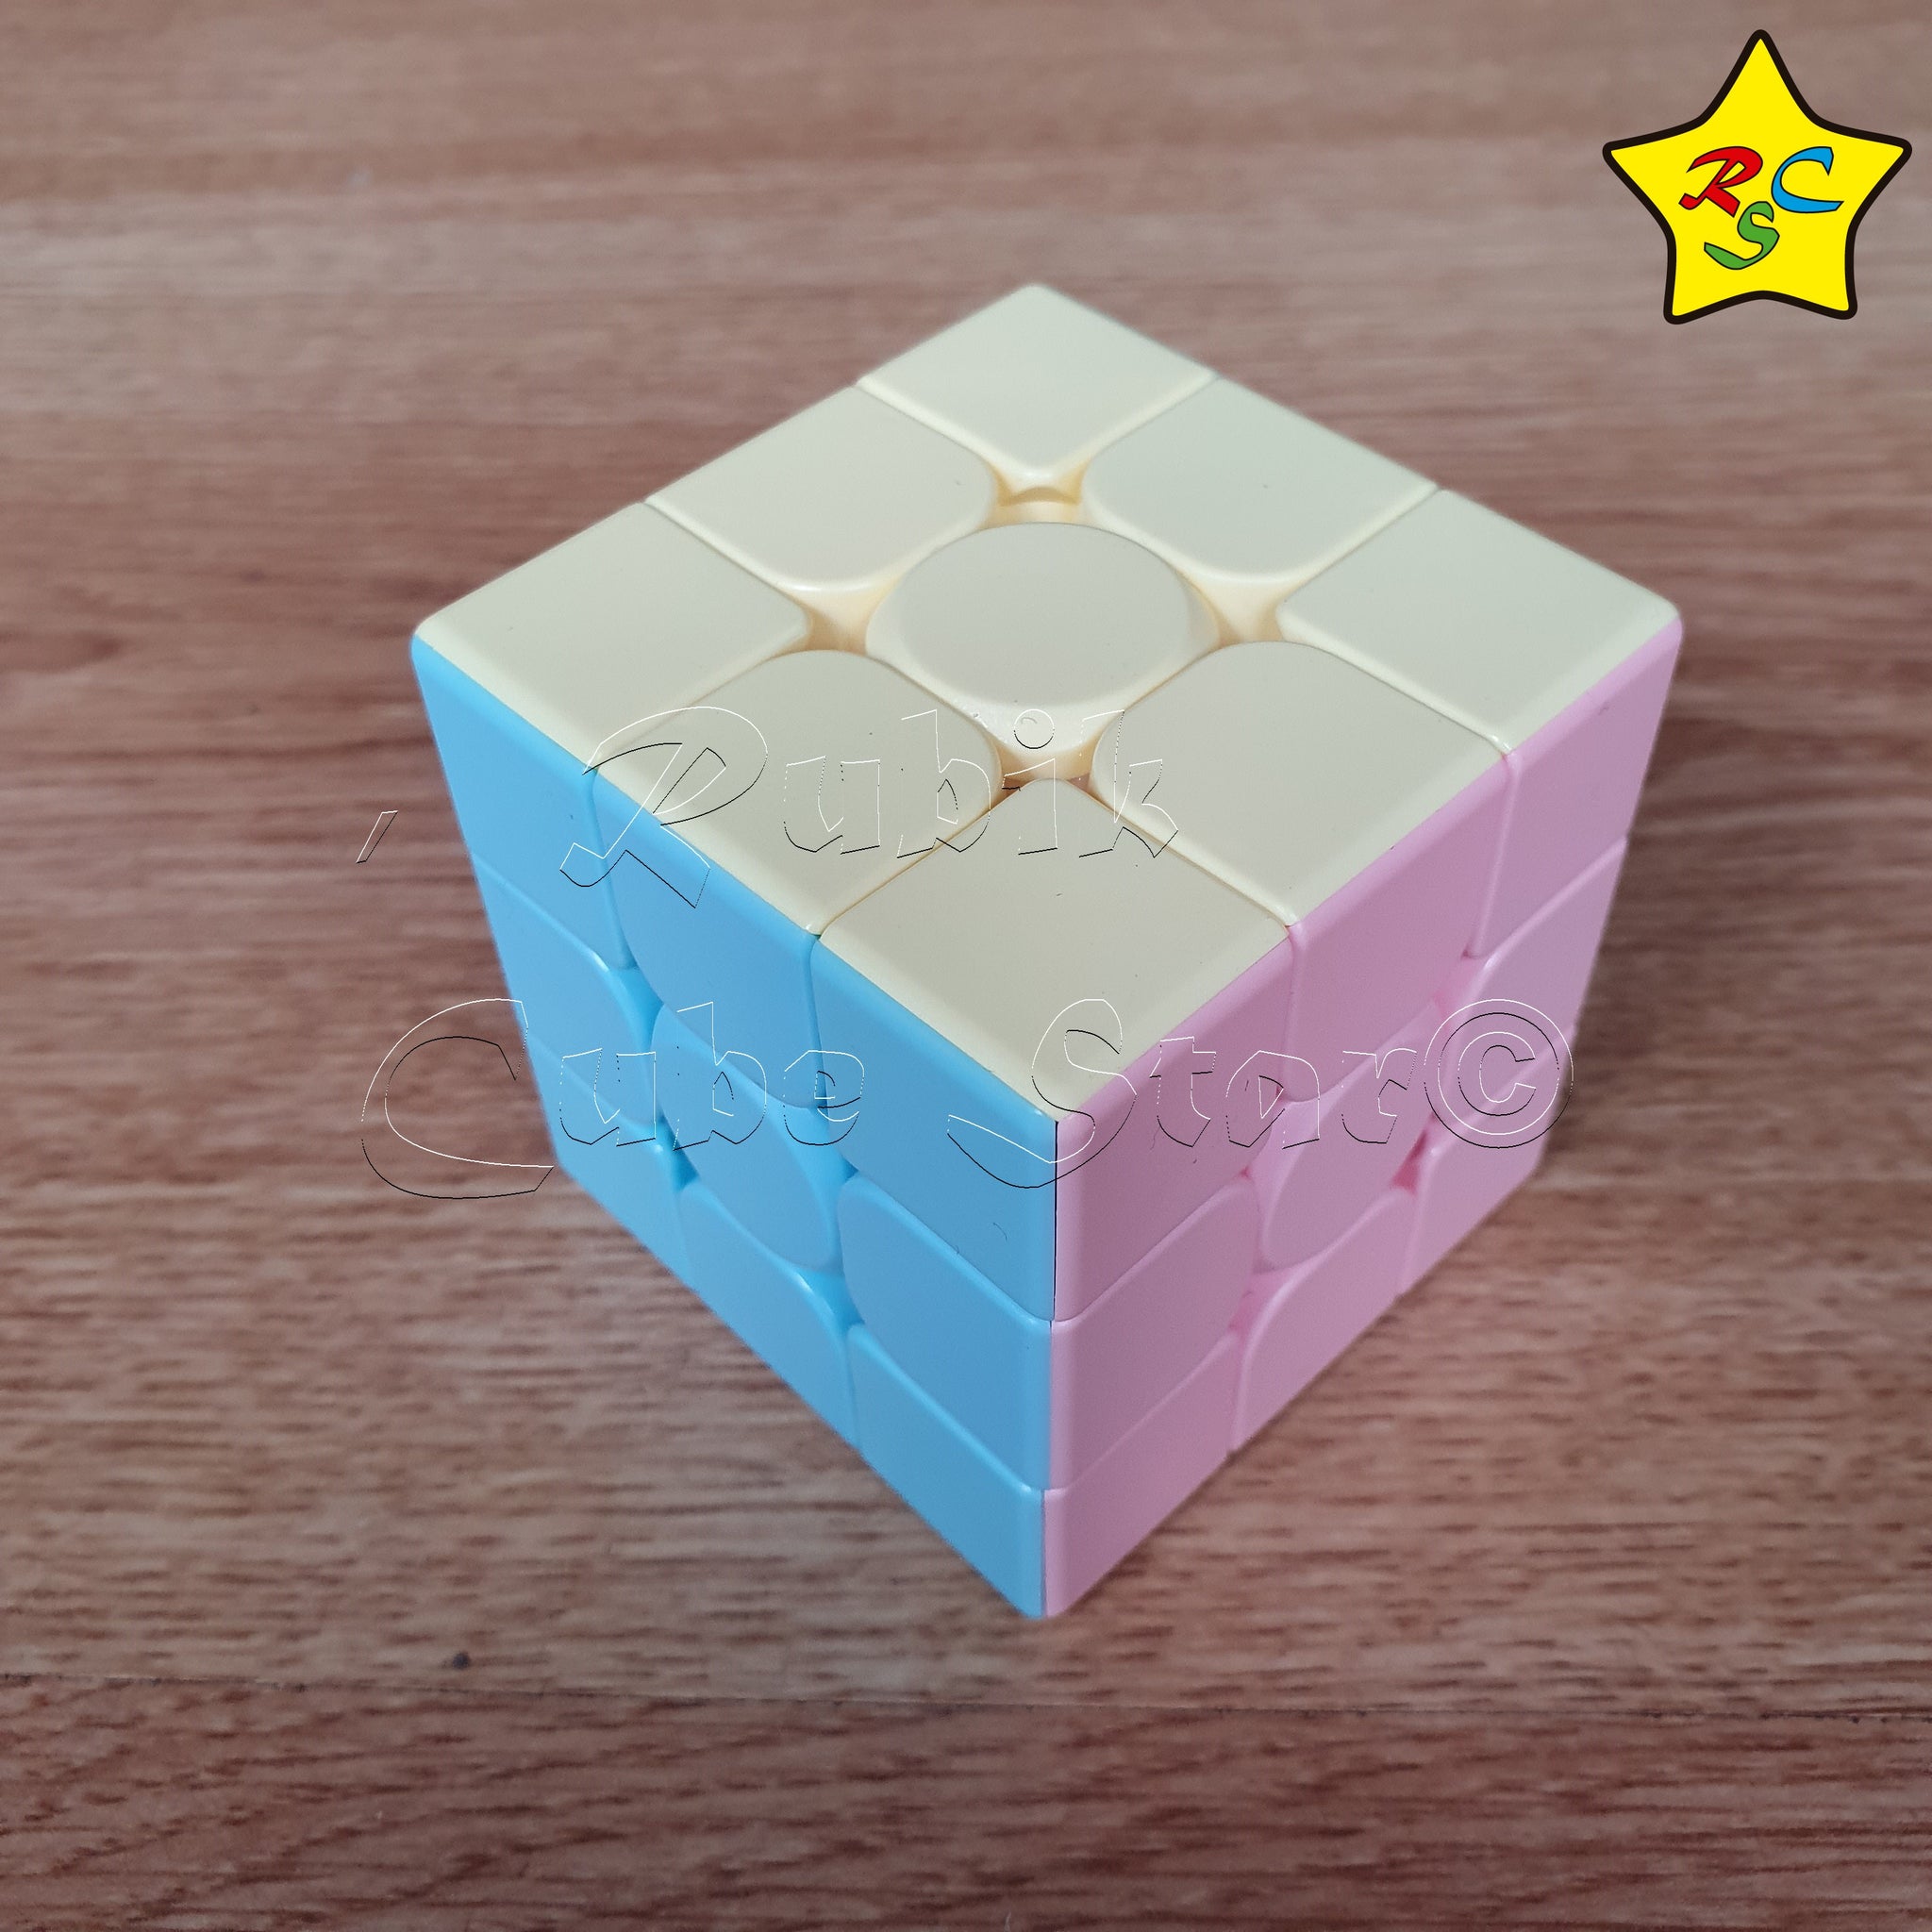 3x3 Meilong Cubo Rubik Macaron Candy Color Moyu Pastel – Rubik Cube Star